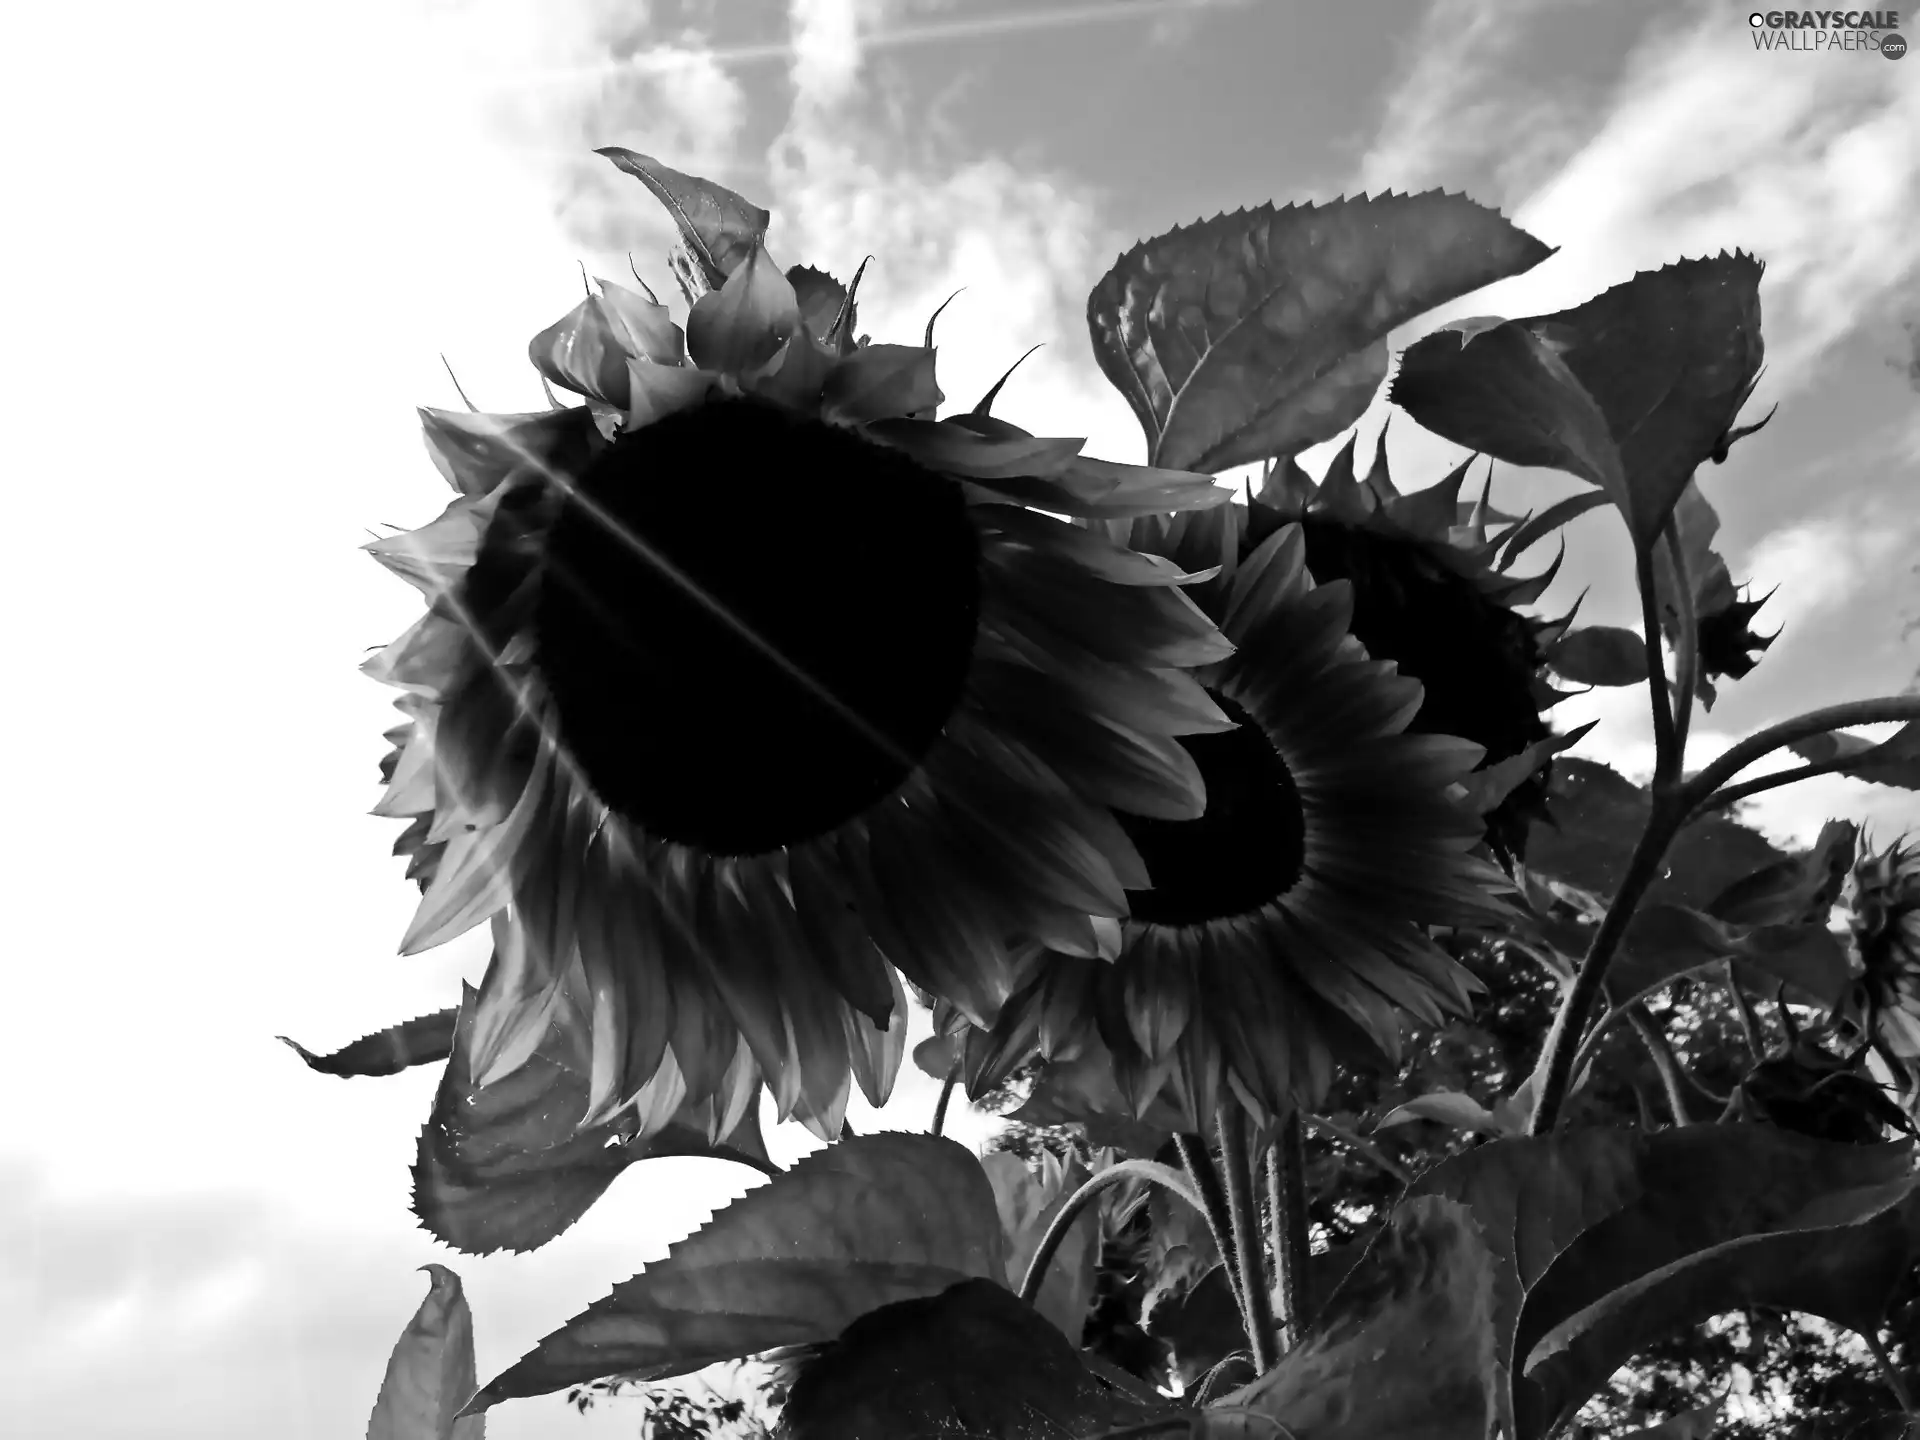 Sunflower, Sky